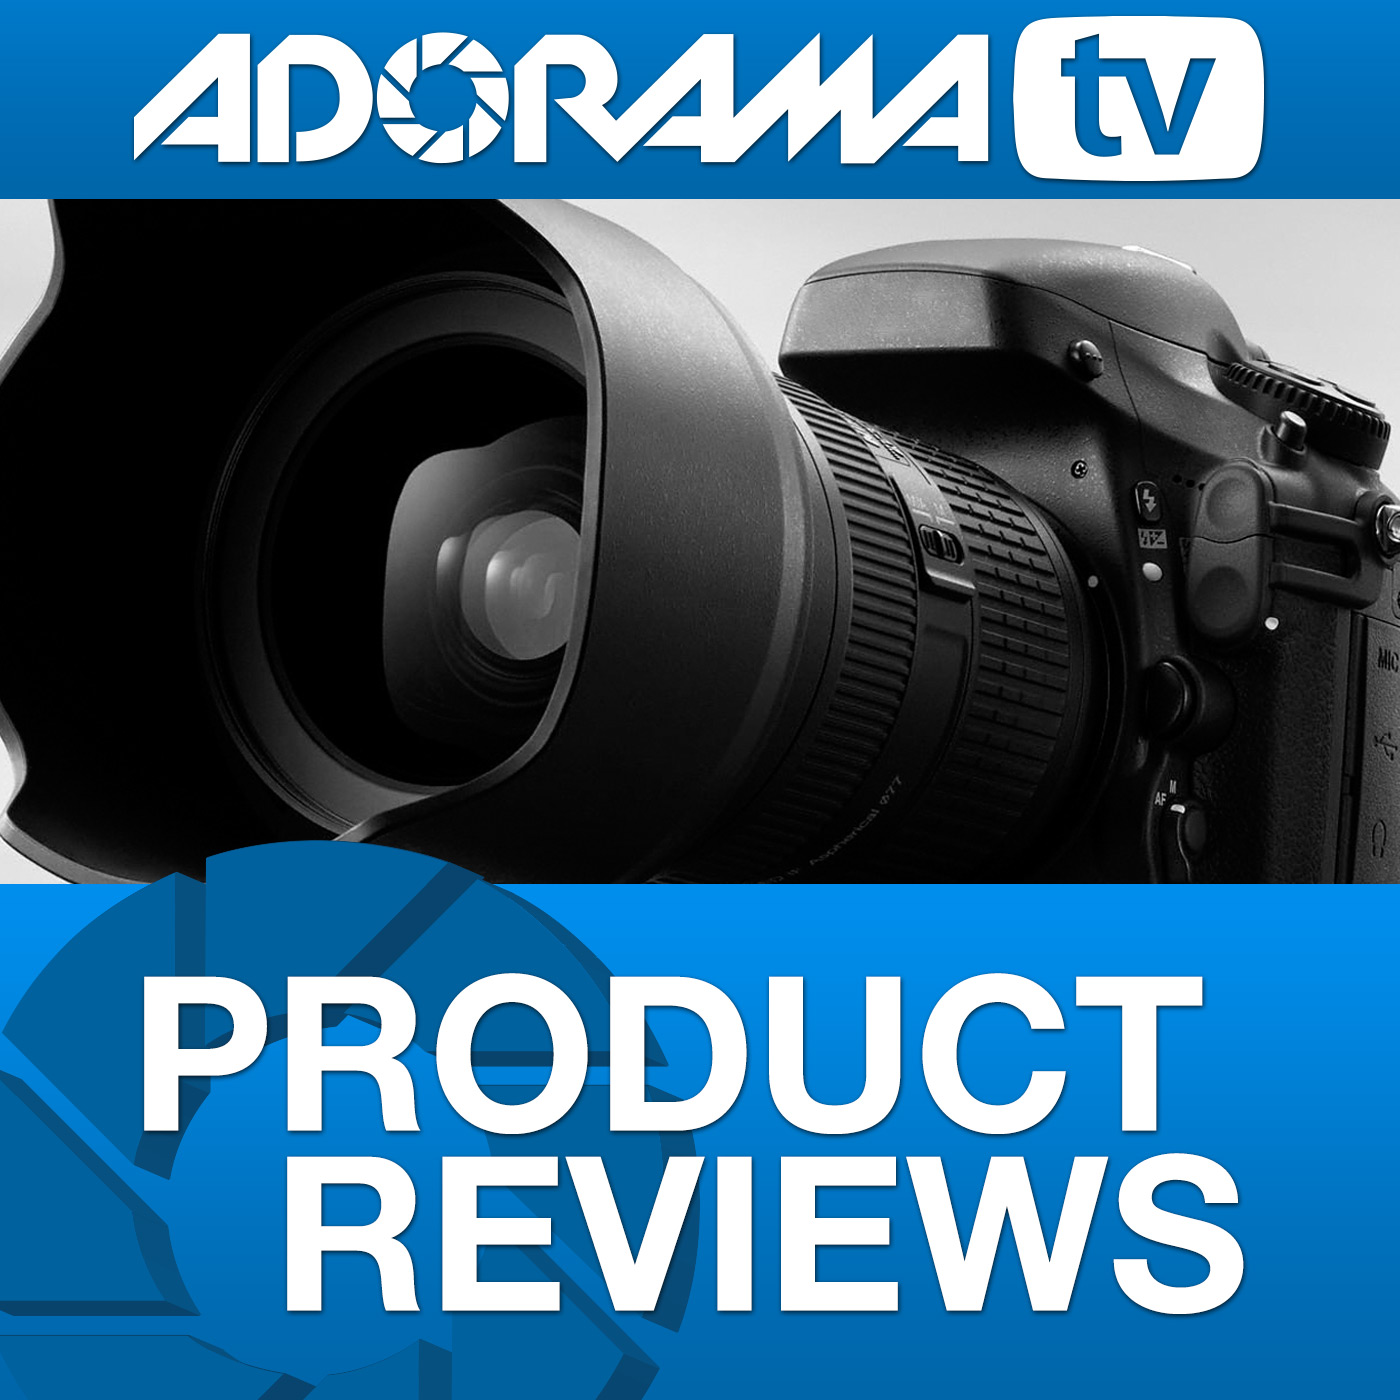 Panasonic Lumix GH4: Product Overview - Adorama Photography TV